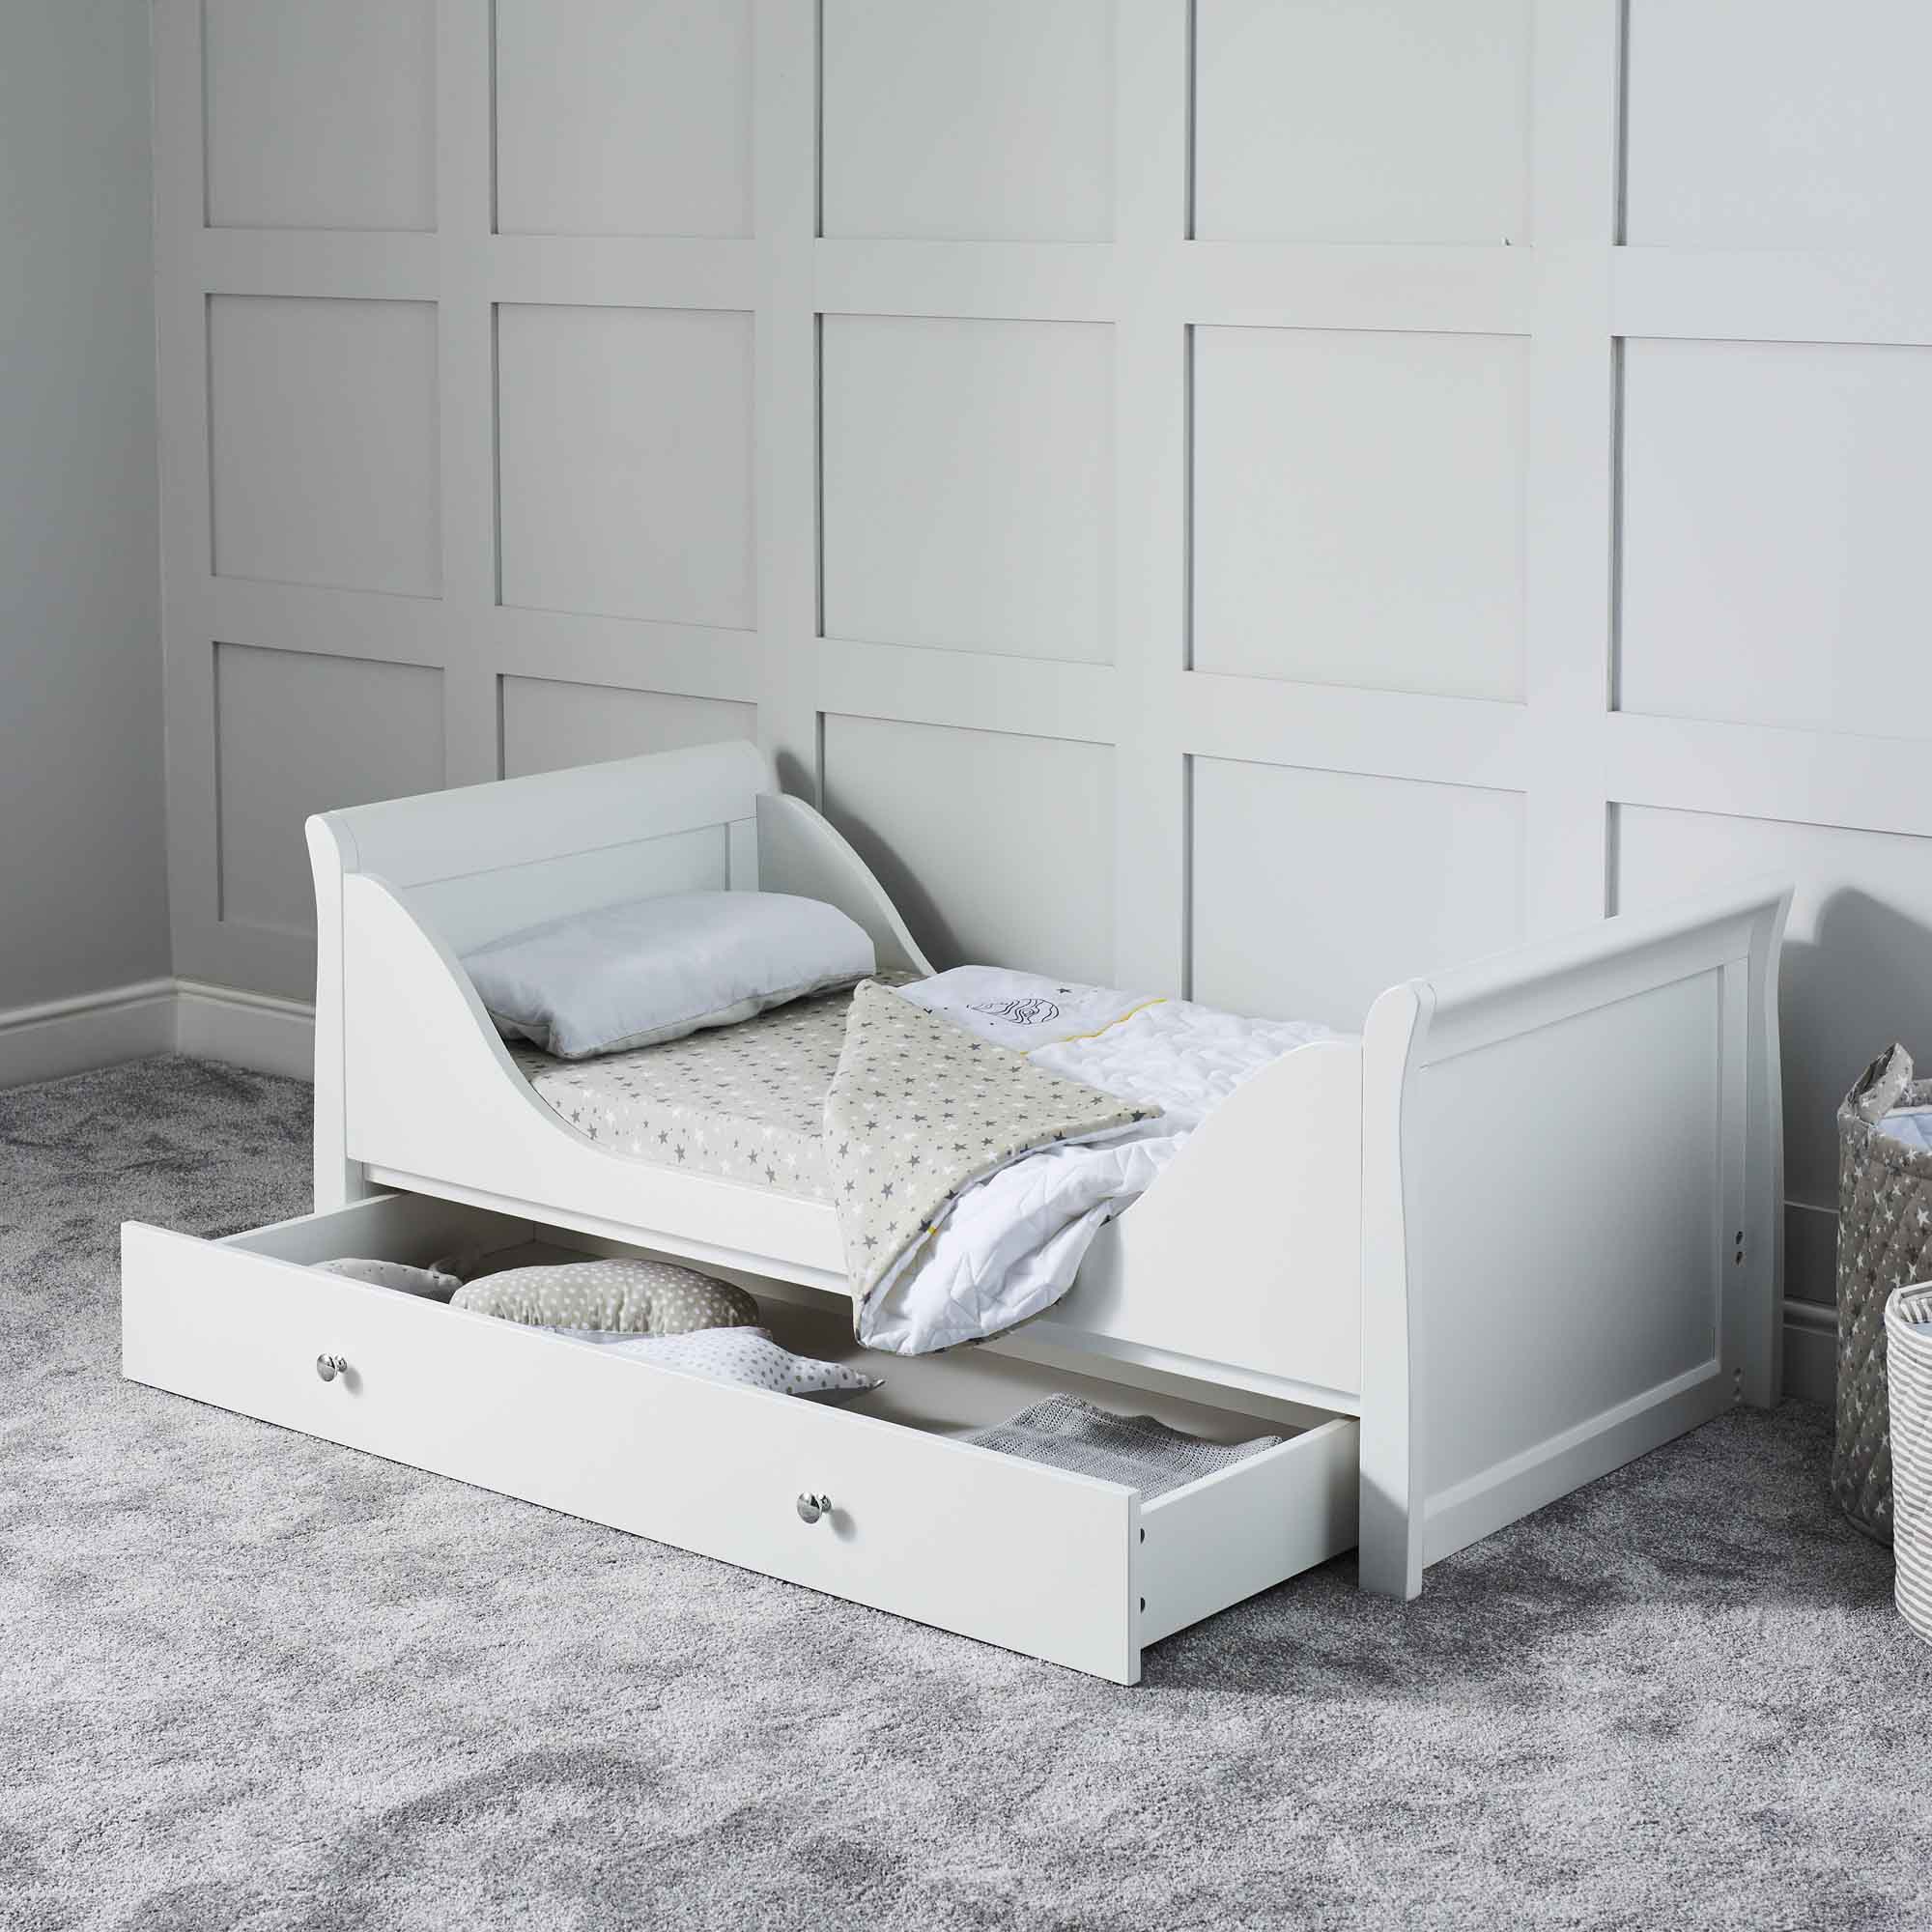 Snowdon Classic Cot Bed